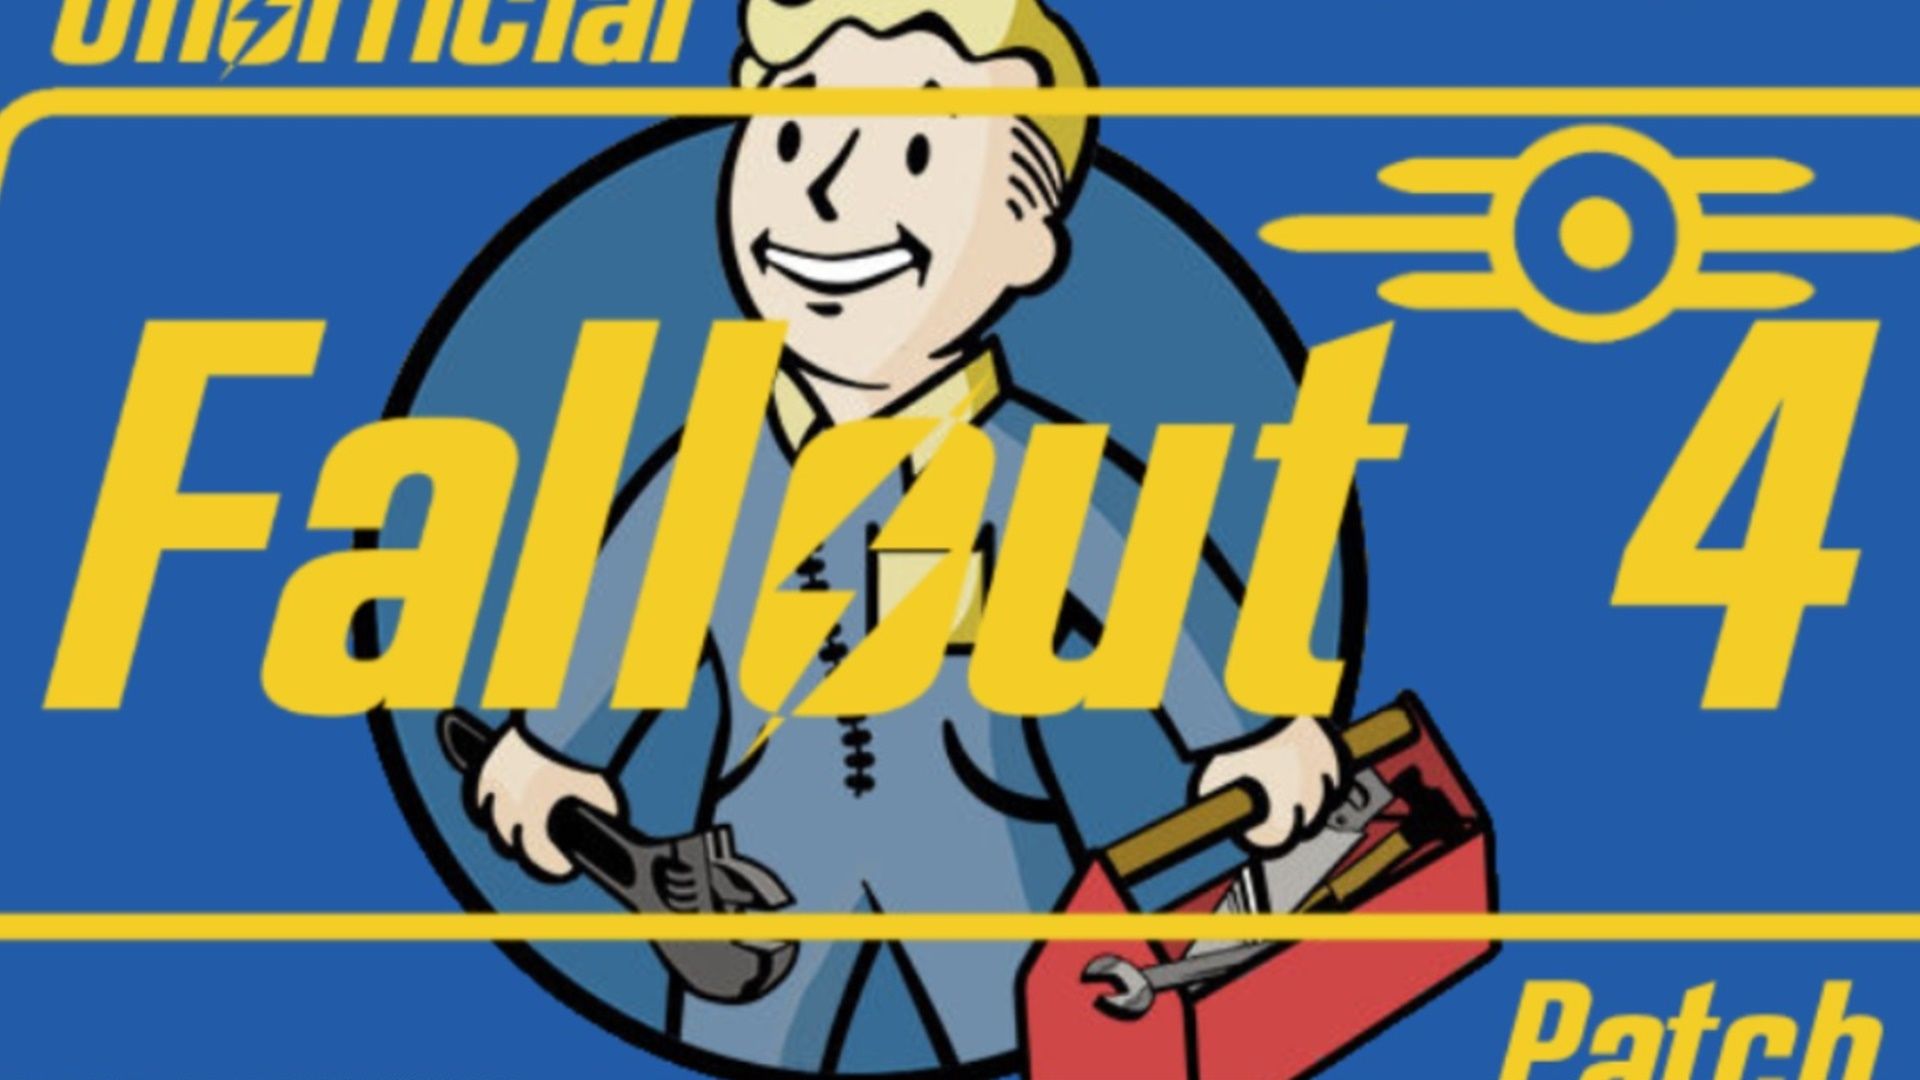 10 Insane Mods That Turn Fallout: New Vegas Into Fallout 4